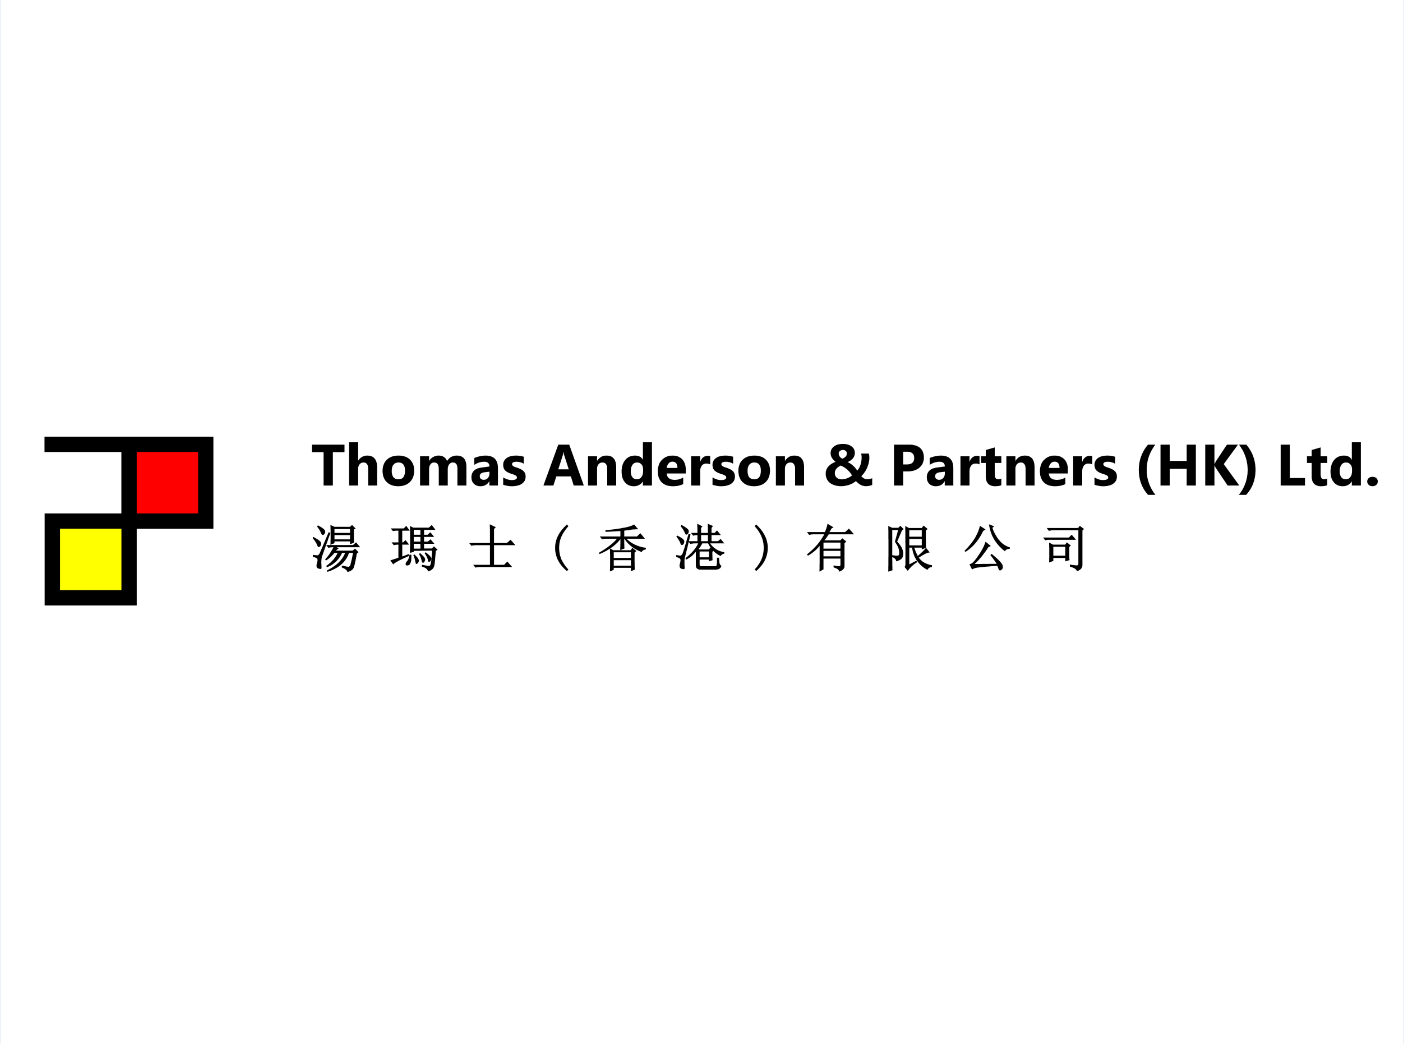 Thomas Anderson & Partners (HK) Ltd